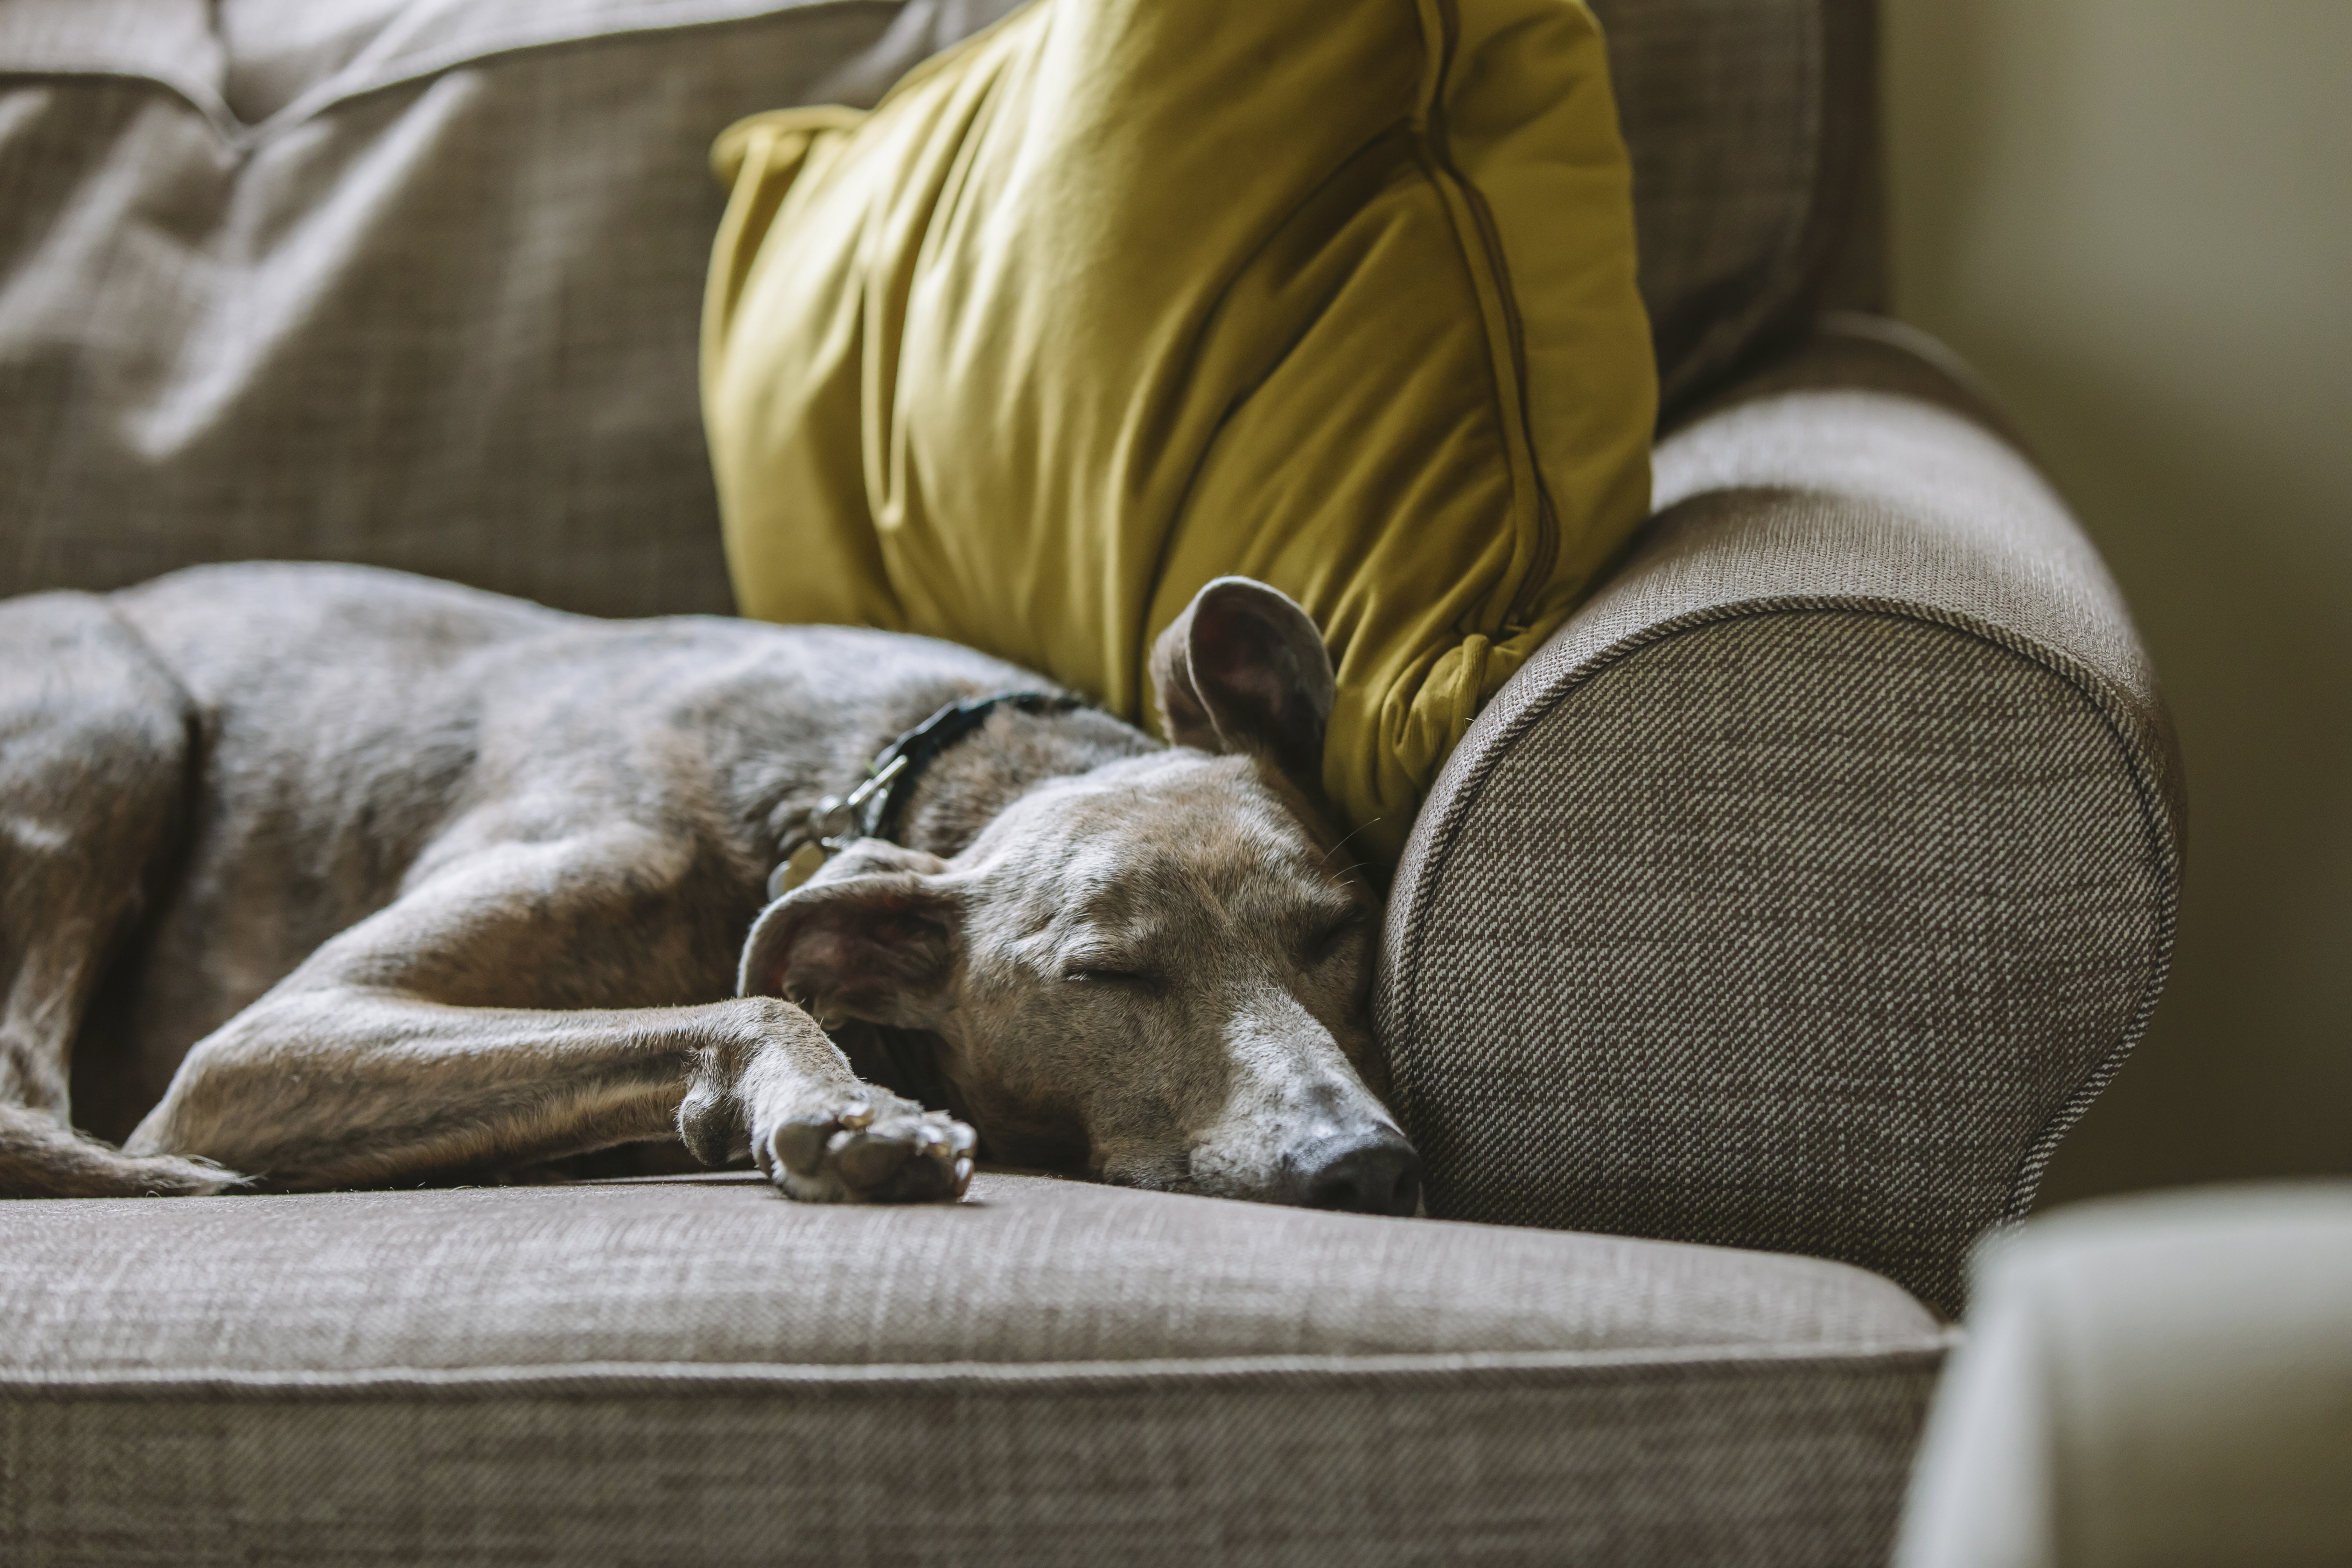 Blue/grey lurcher sleeping on beige sofa with yellow cushions